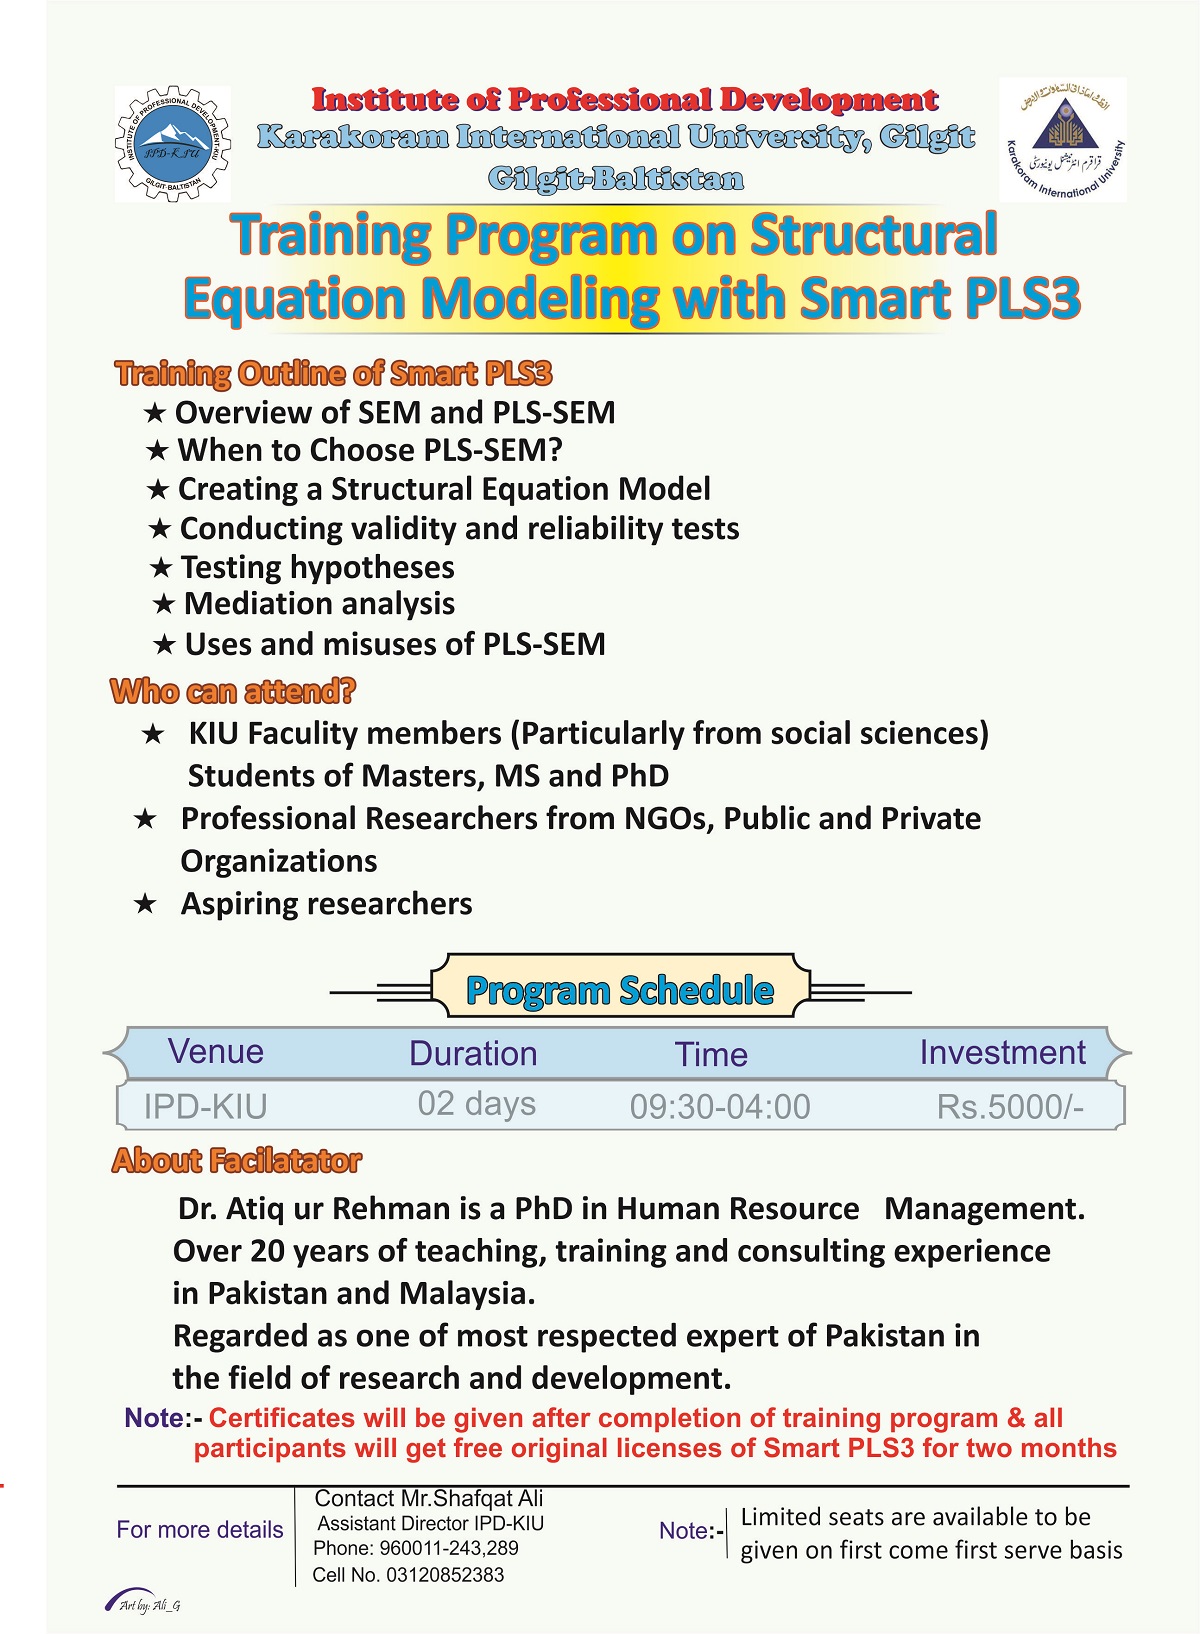 Training Program on Structural Equation Modeling with Smart PLS3